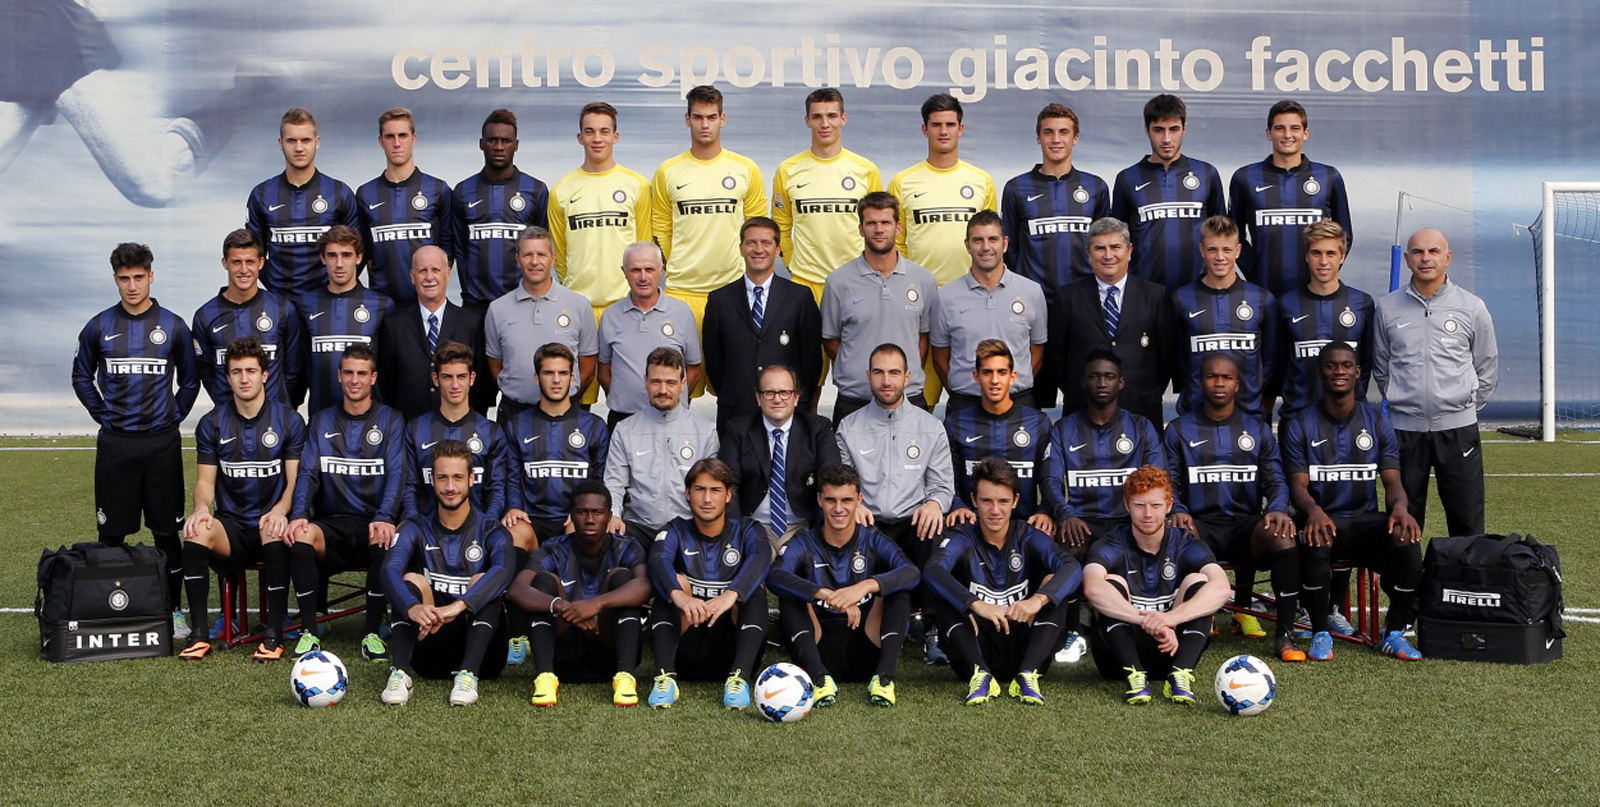 Inter Primavera resume league duties with a win